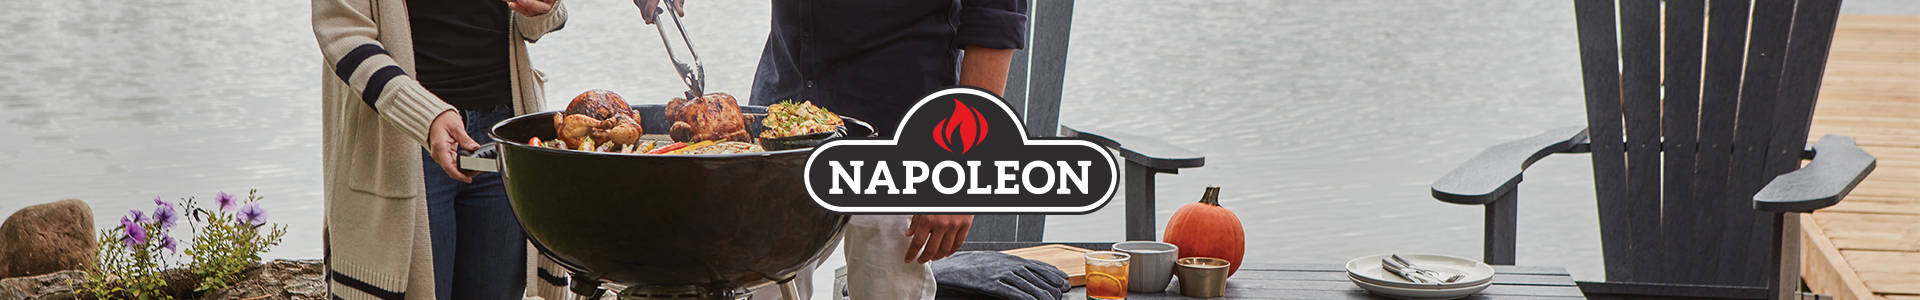 Napoleon Charcoal Grills